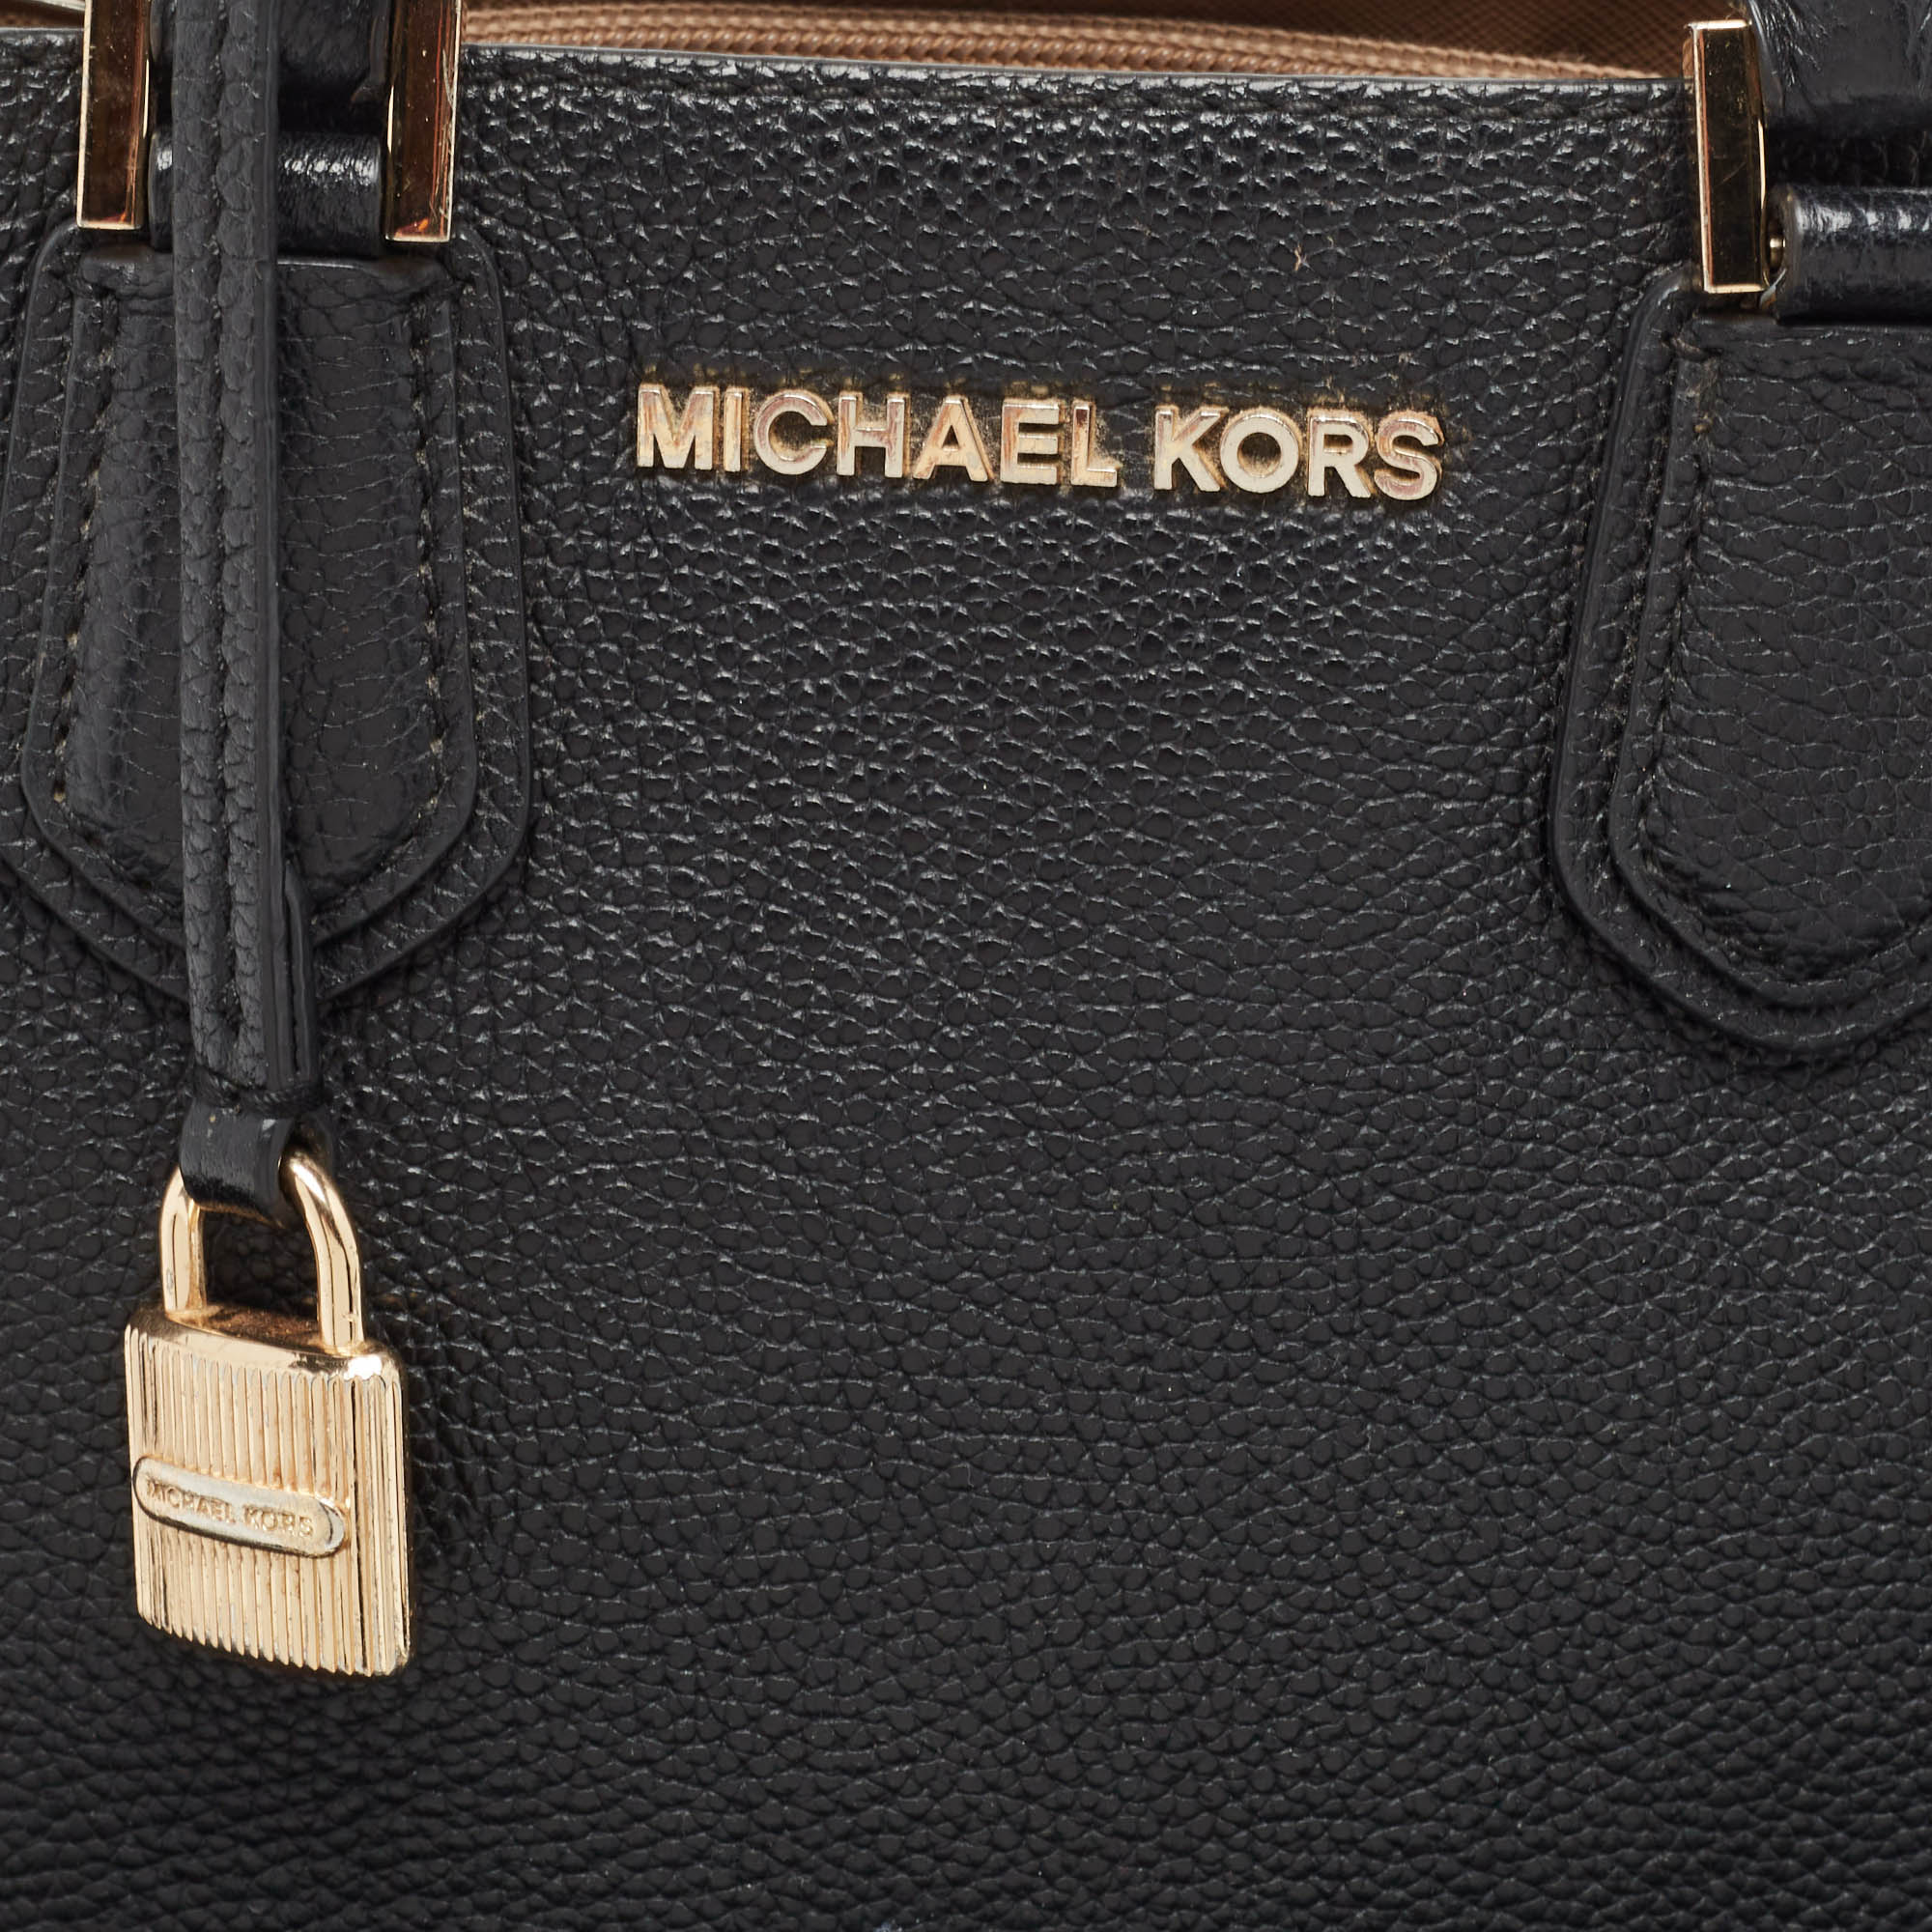 Michael Kors Black Leather Adele Tote